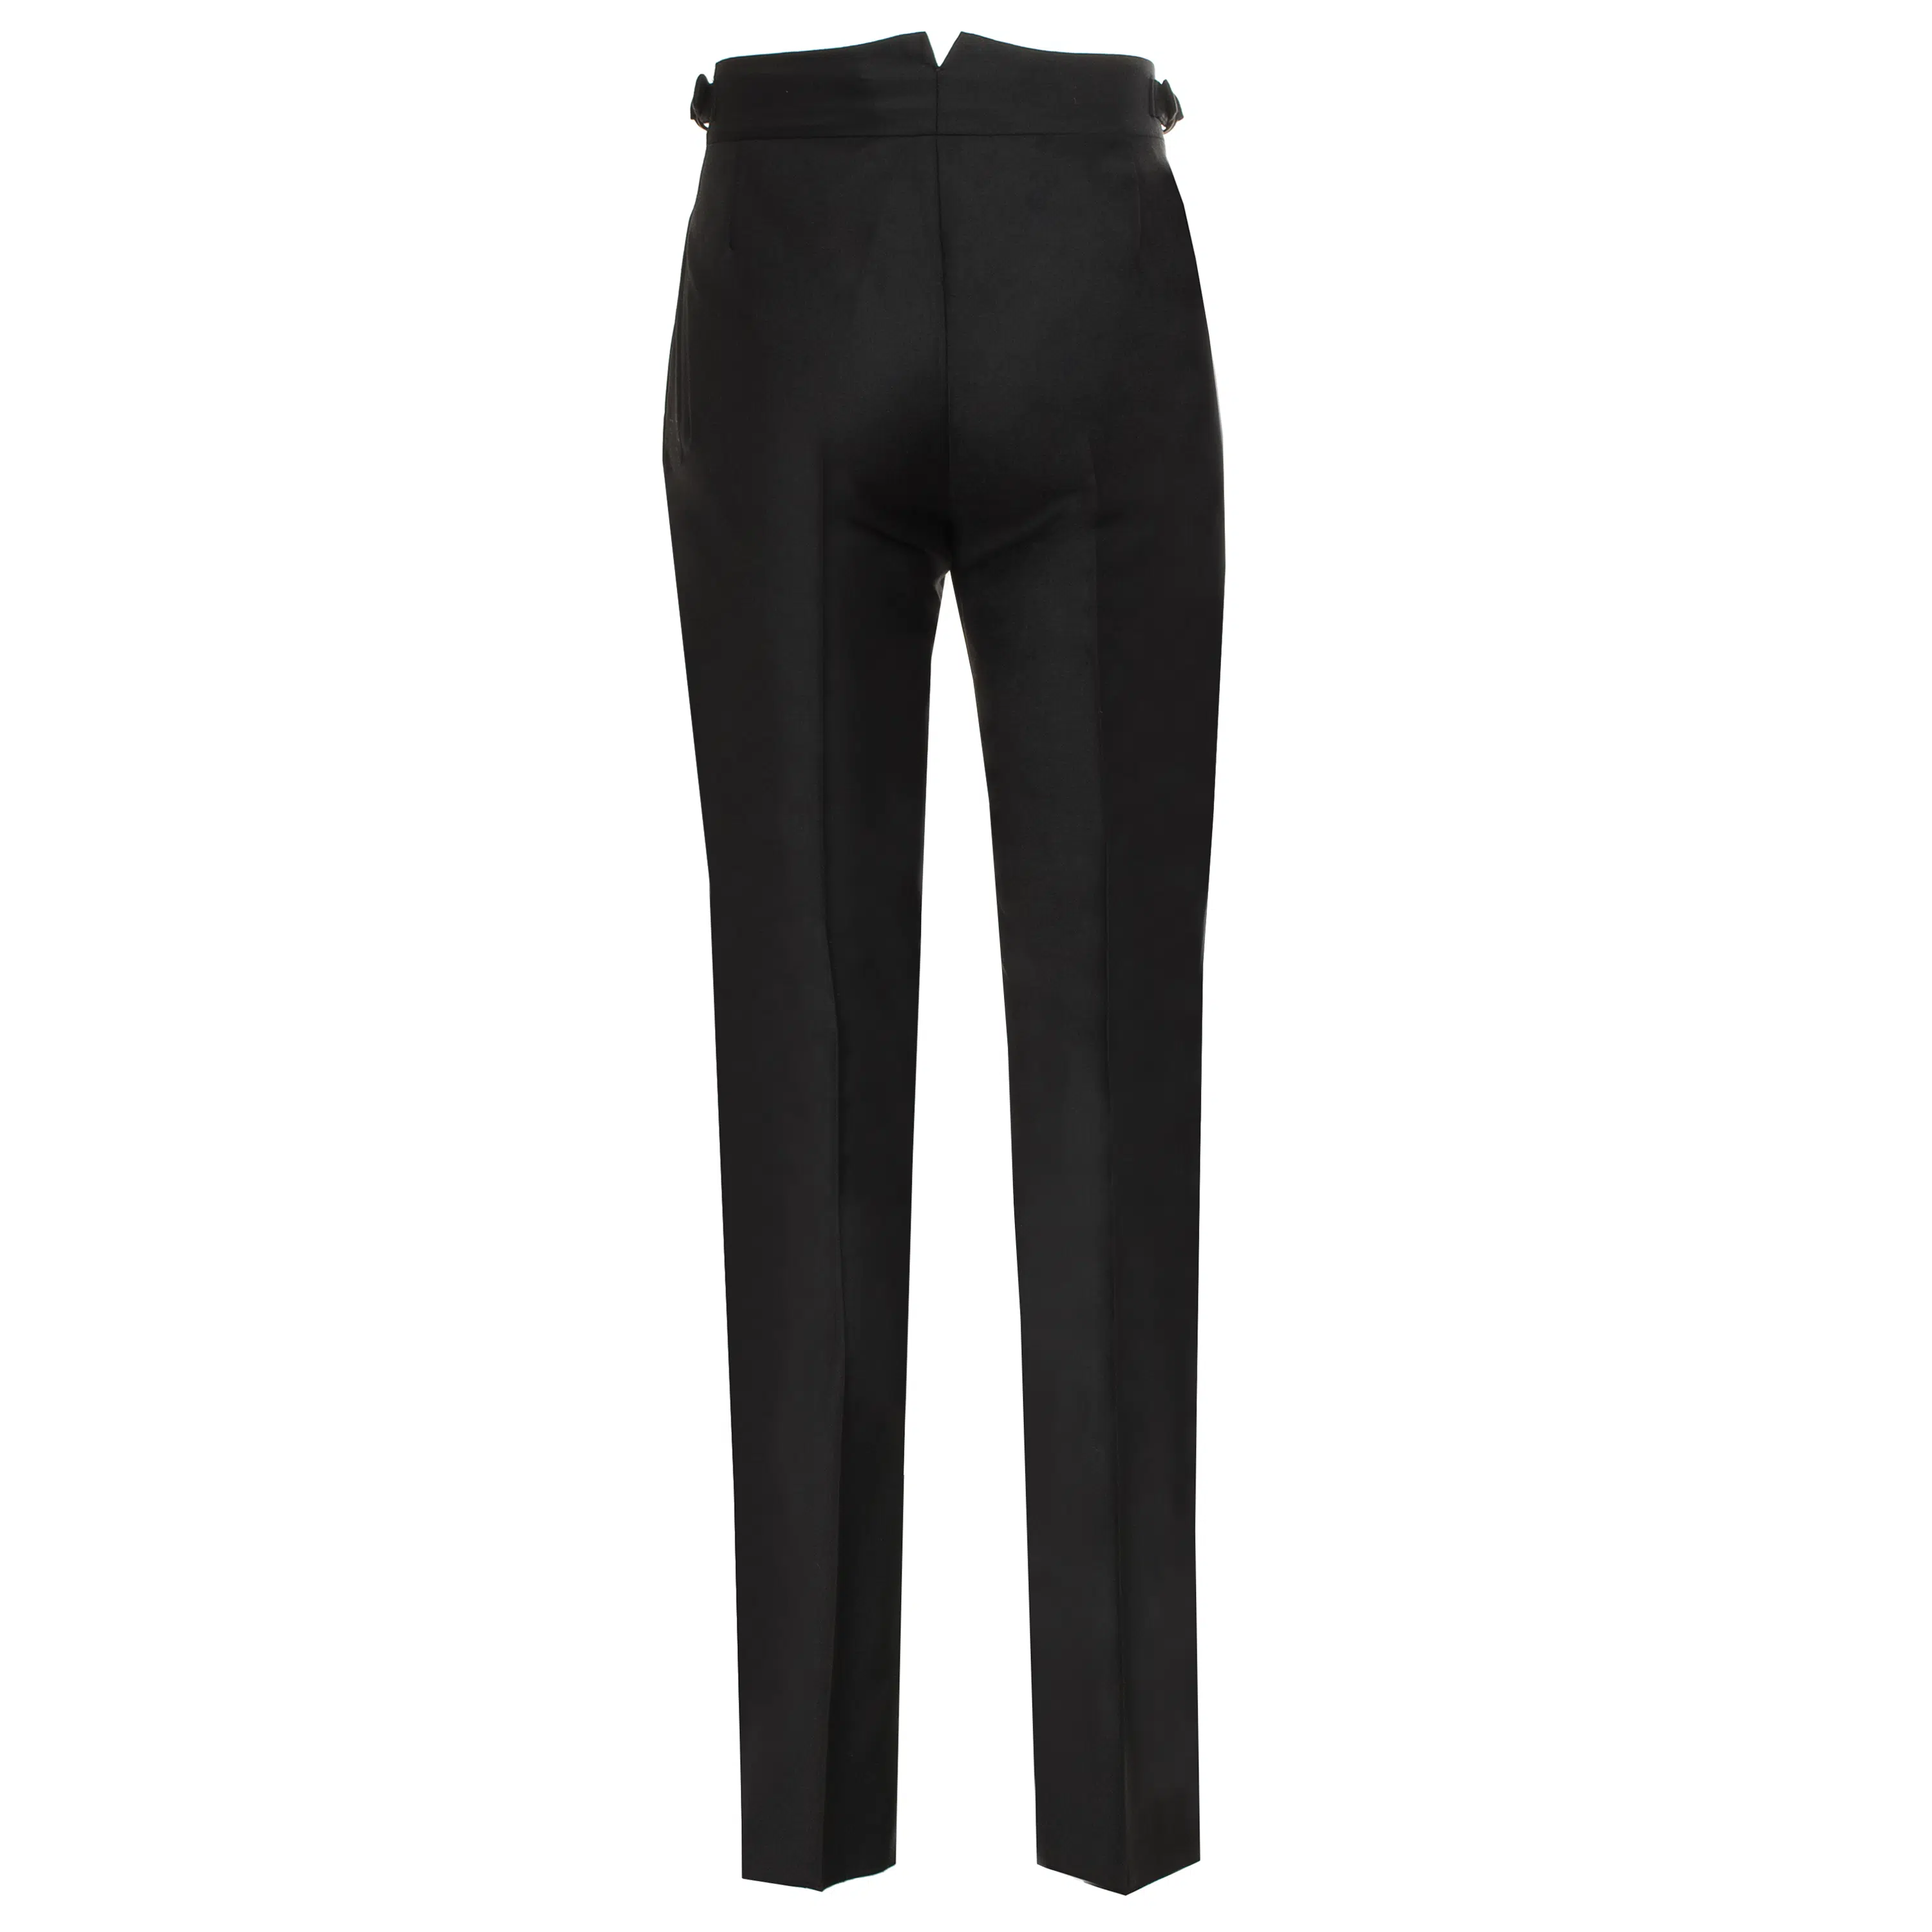 Esprit women's black formal trousers · Women's fashion · El Corte Inglés-hangkhonggiare.com.vn